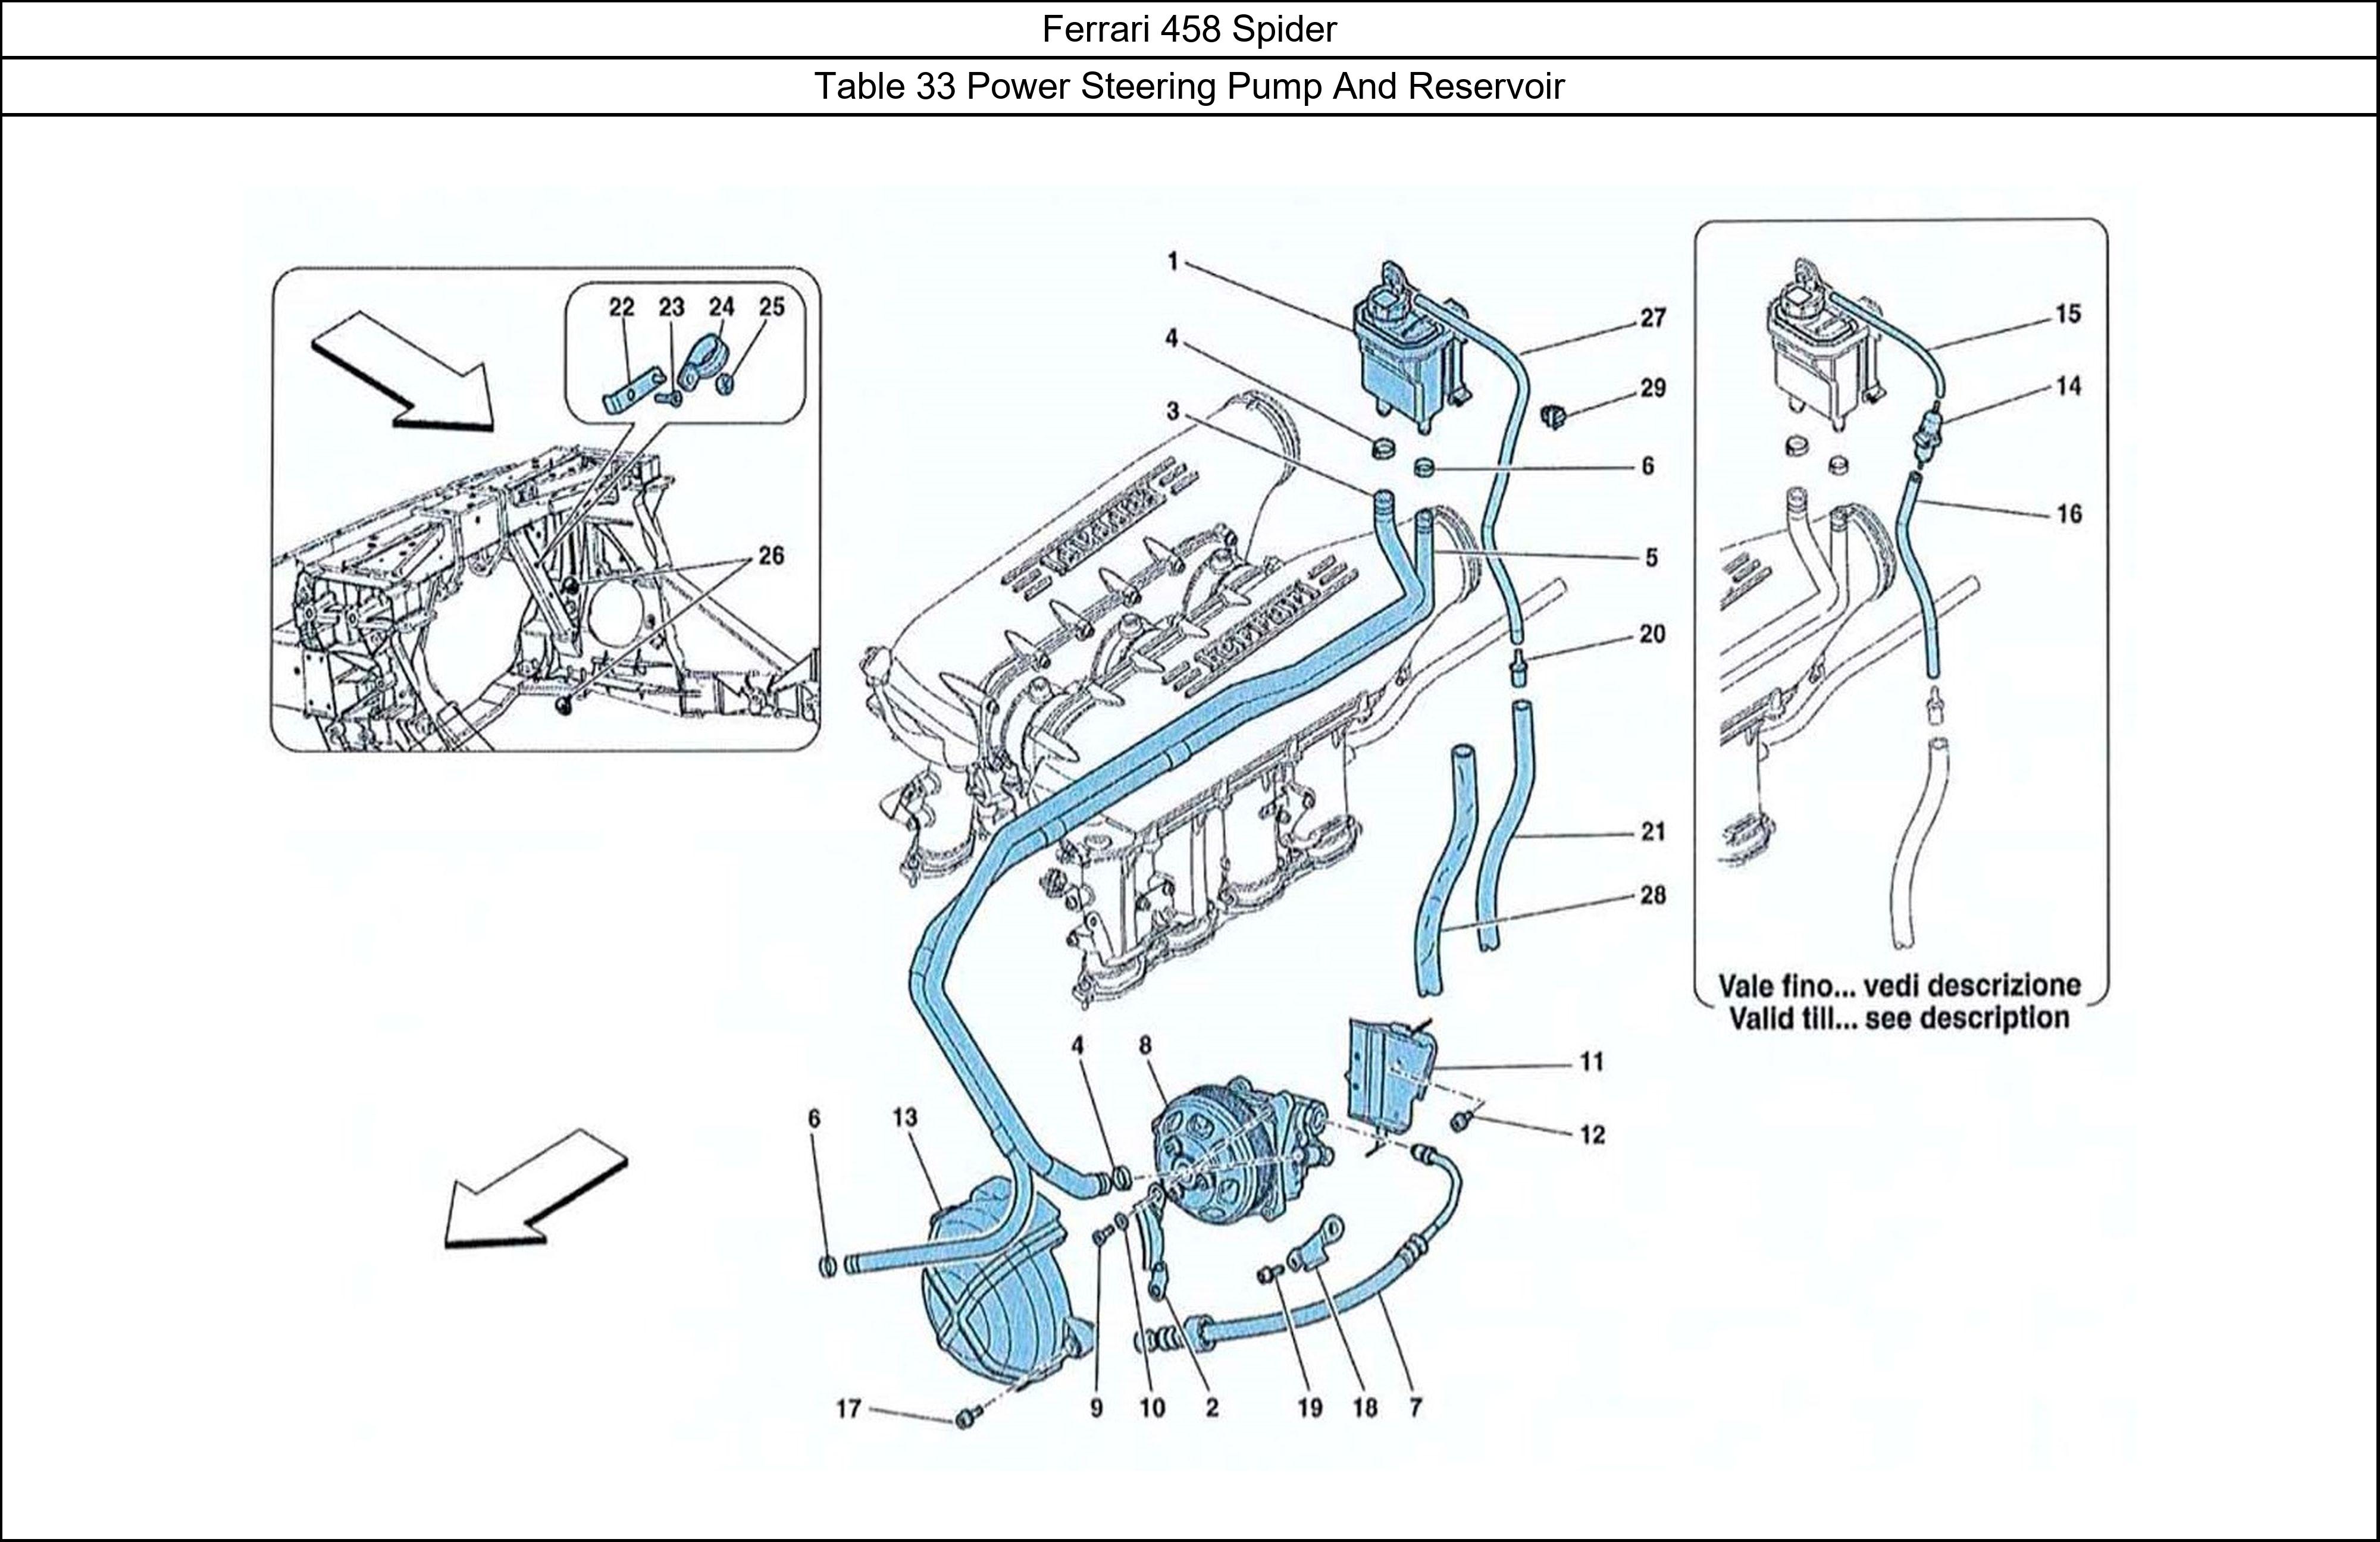 Ferrari Parts Ferrari 458 Spider Table 33 Power Steering Pump And Reservoir